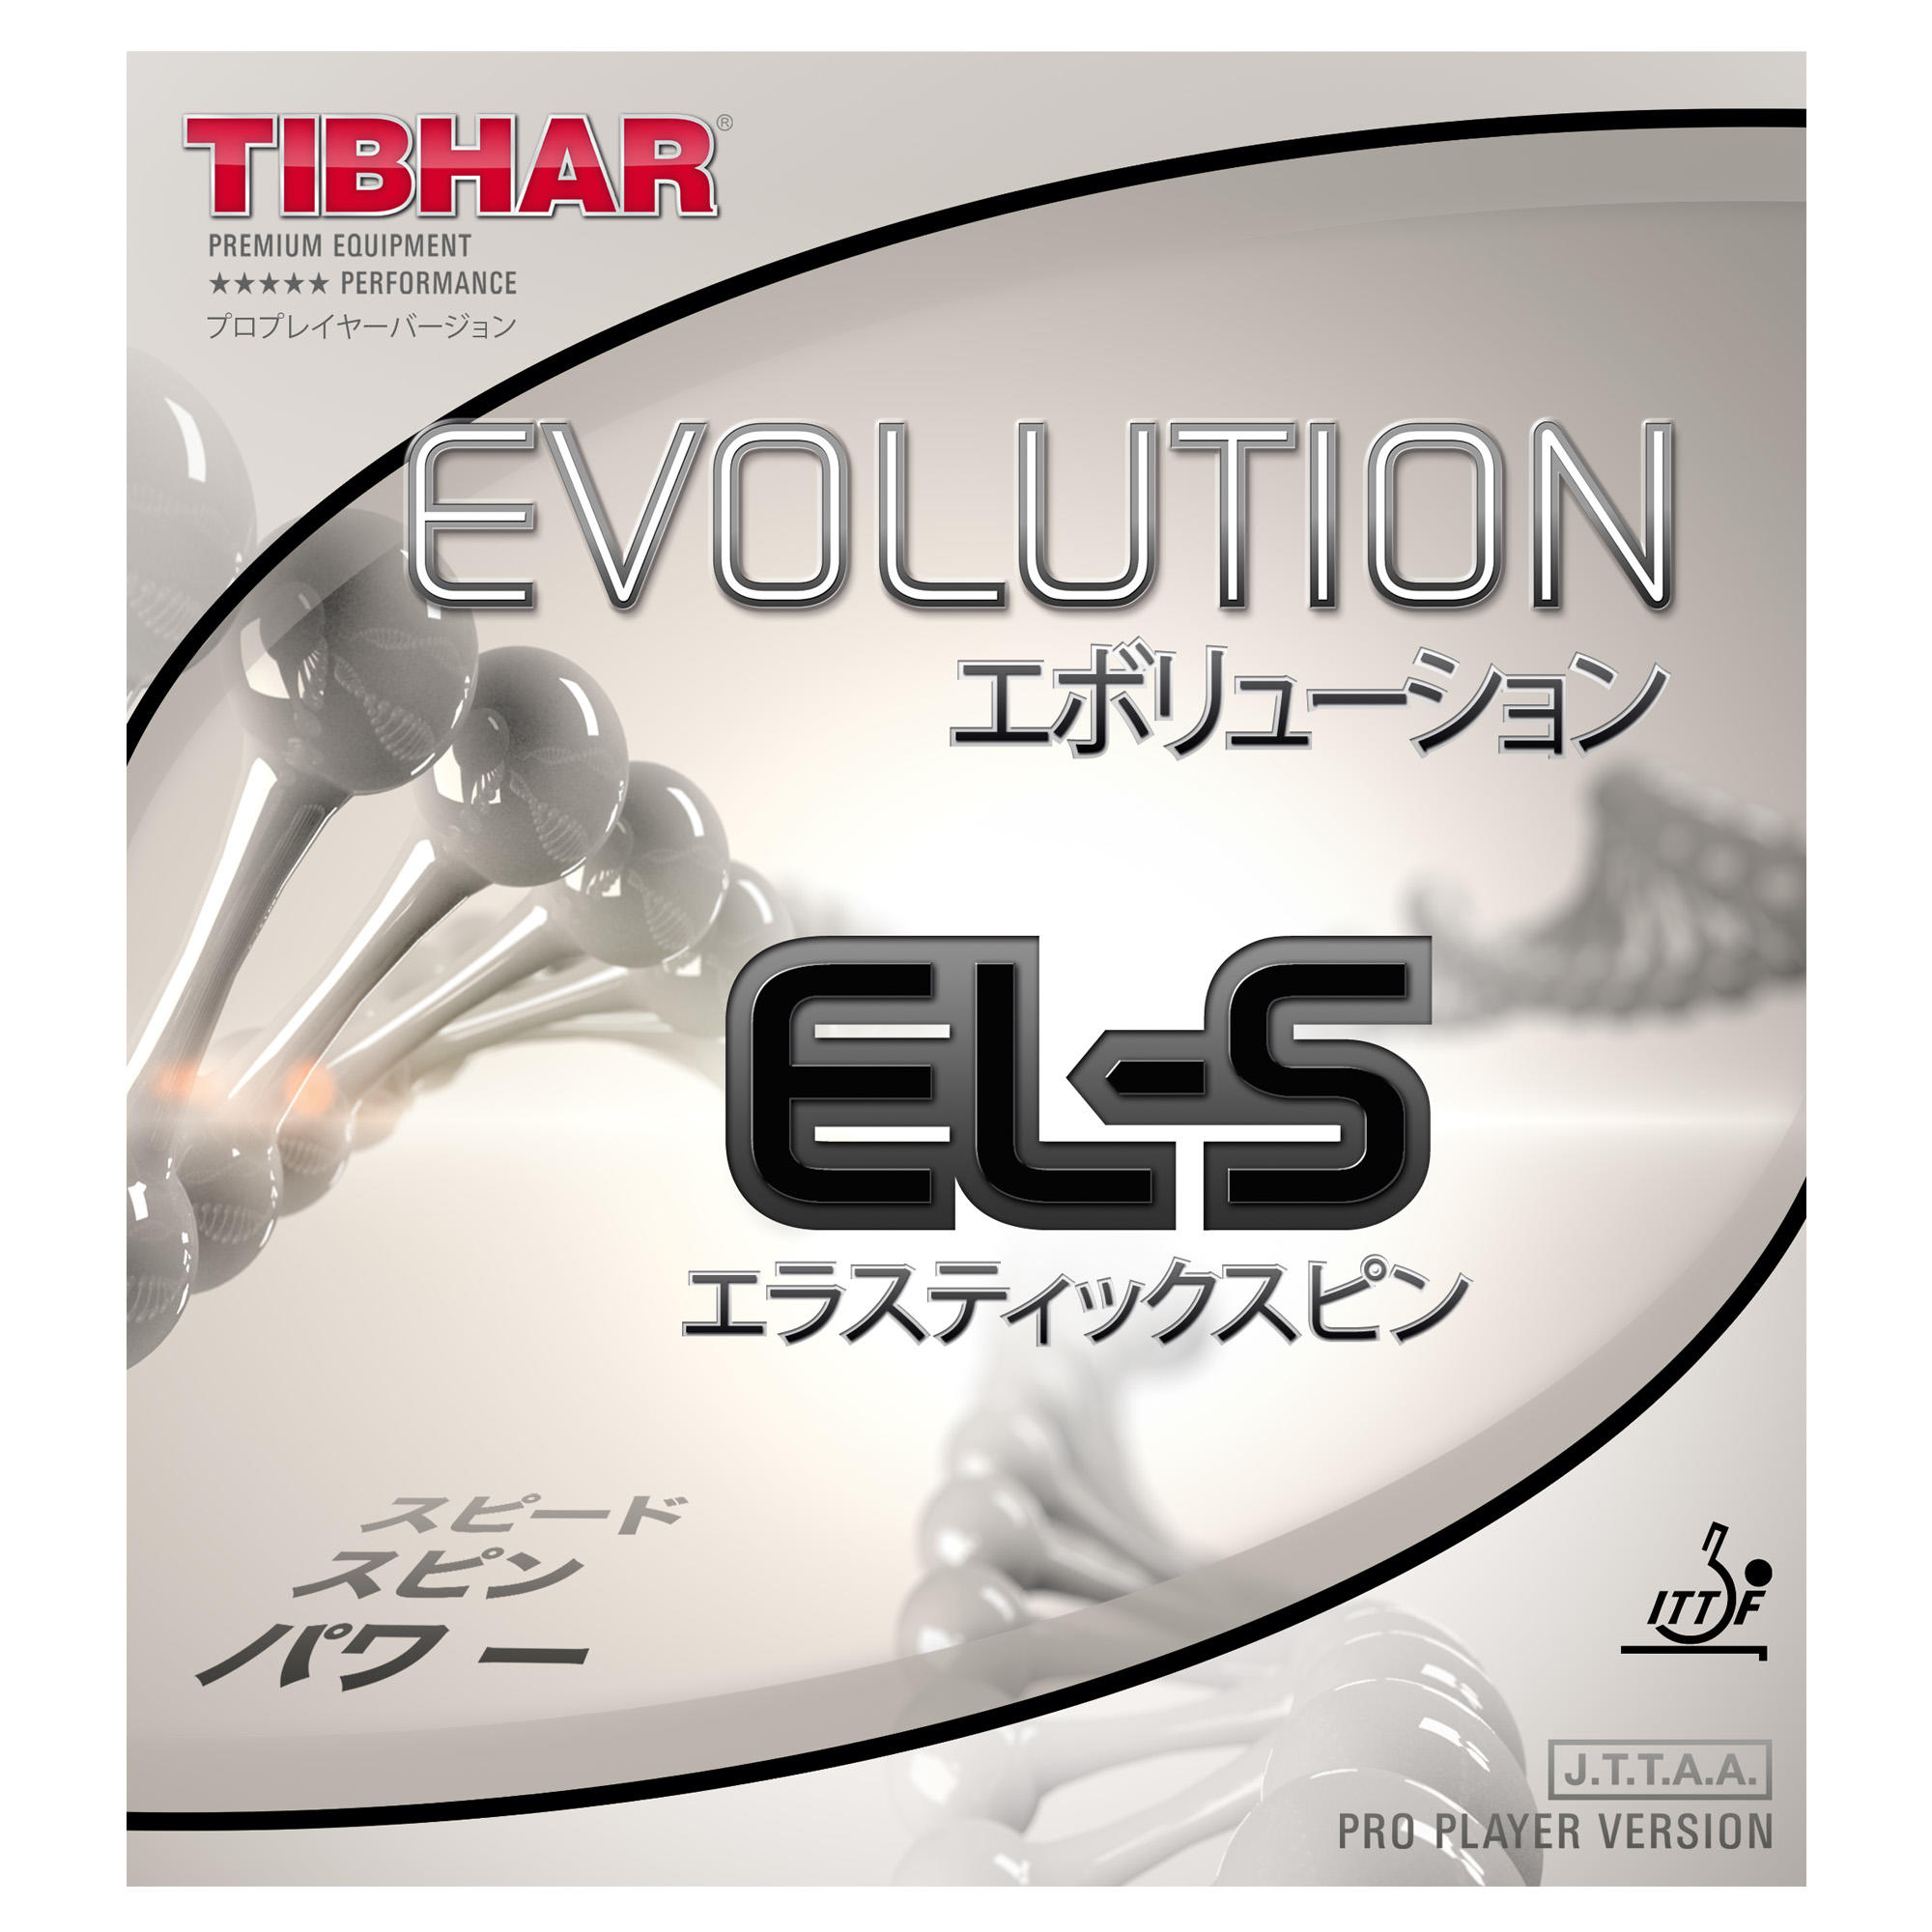 Față Paletă Tenis Evolution EL-S decathlon.ro